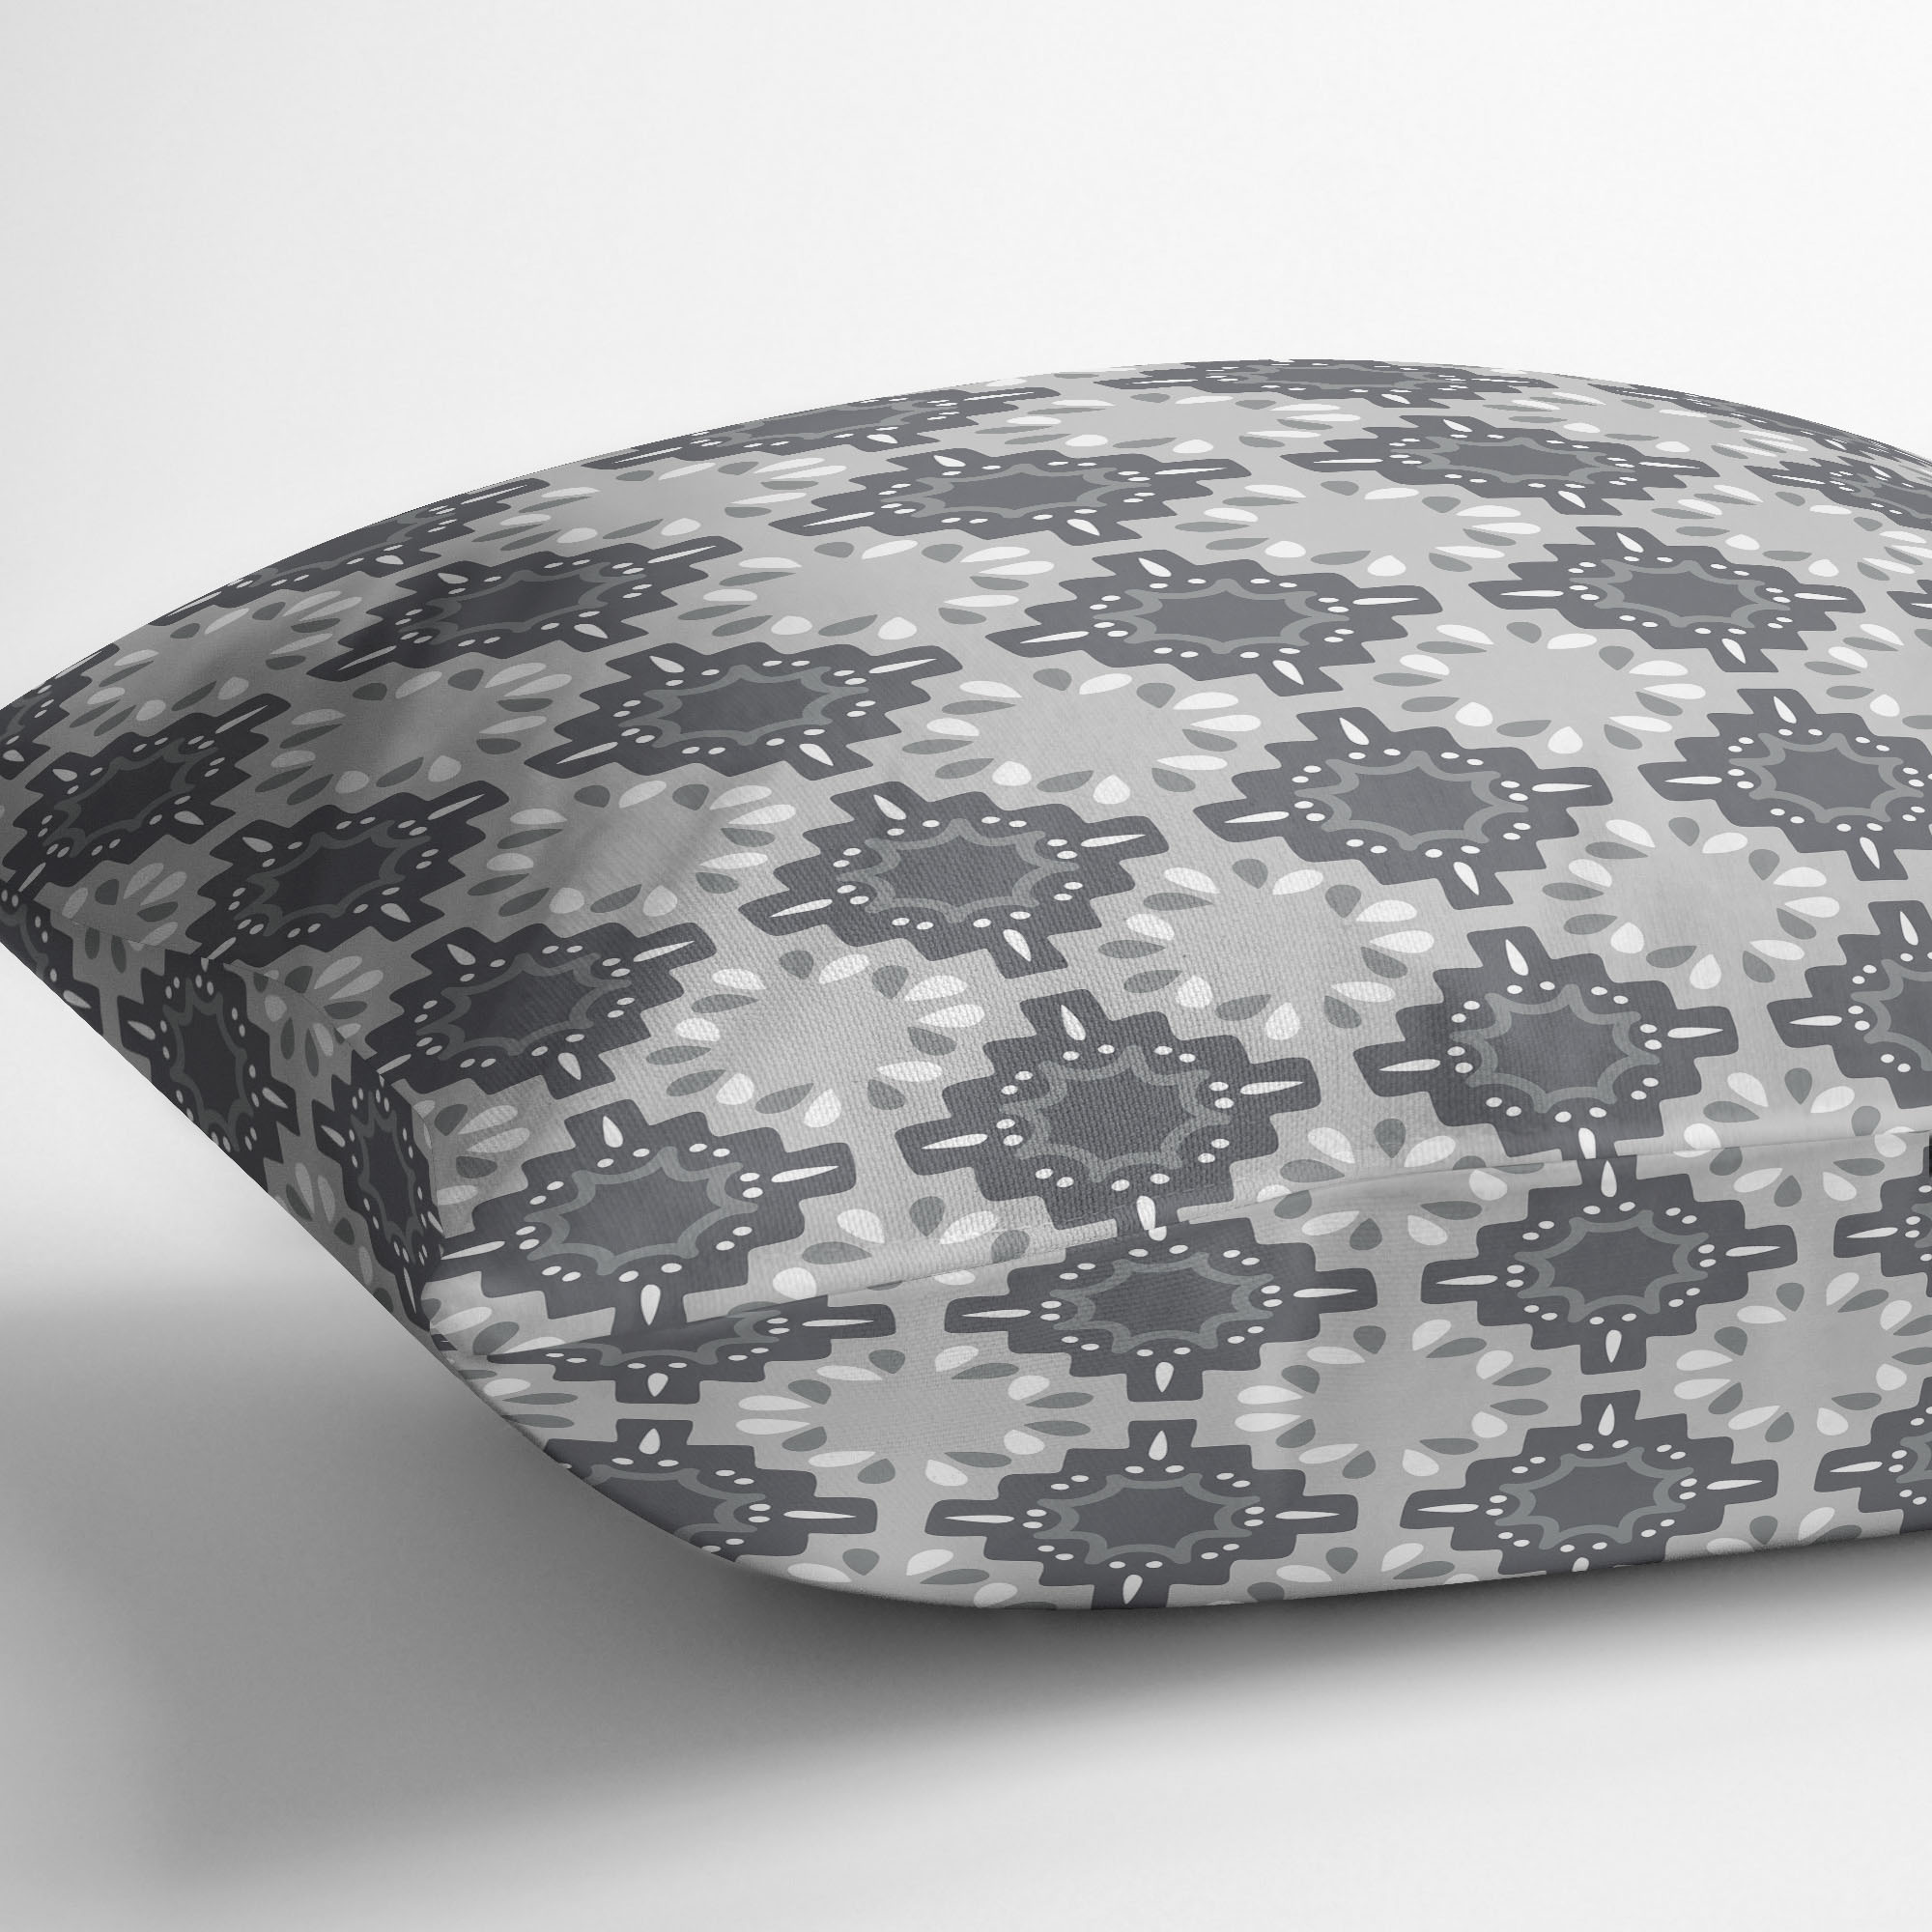 Estrella Stone Outdoor Pillow by Kavka Designs - image 4 of 5